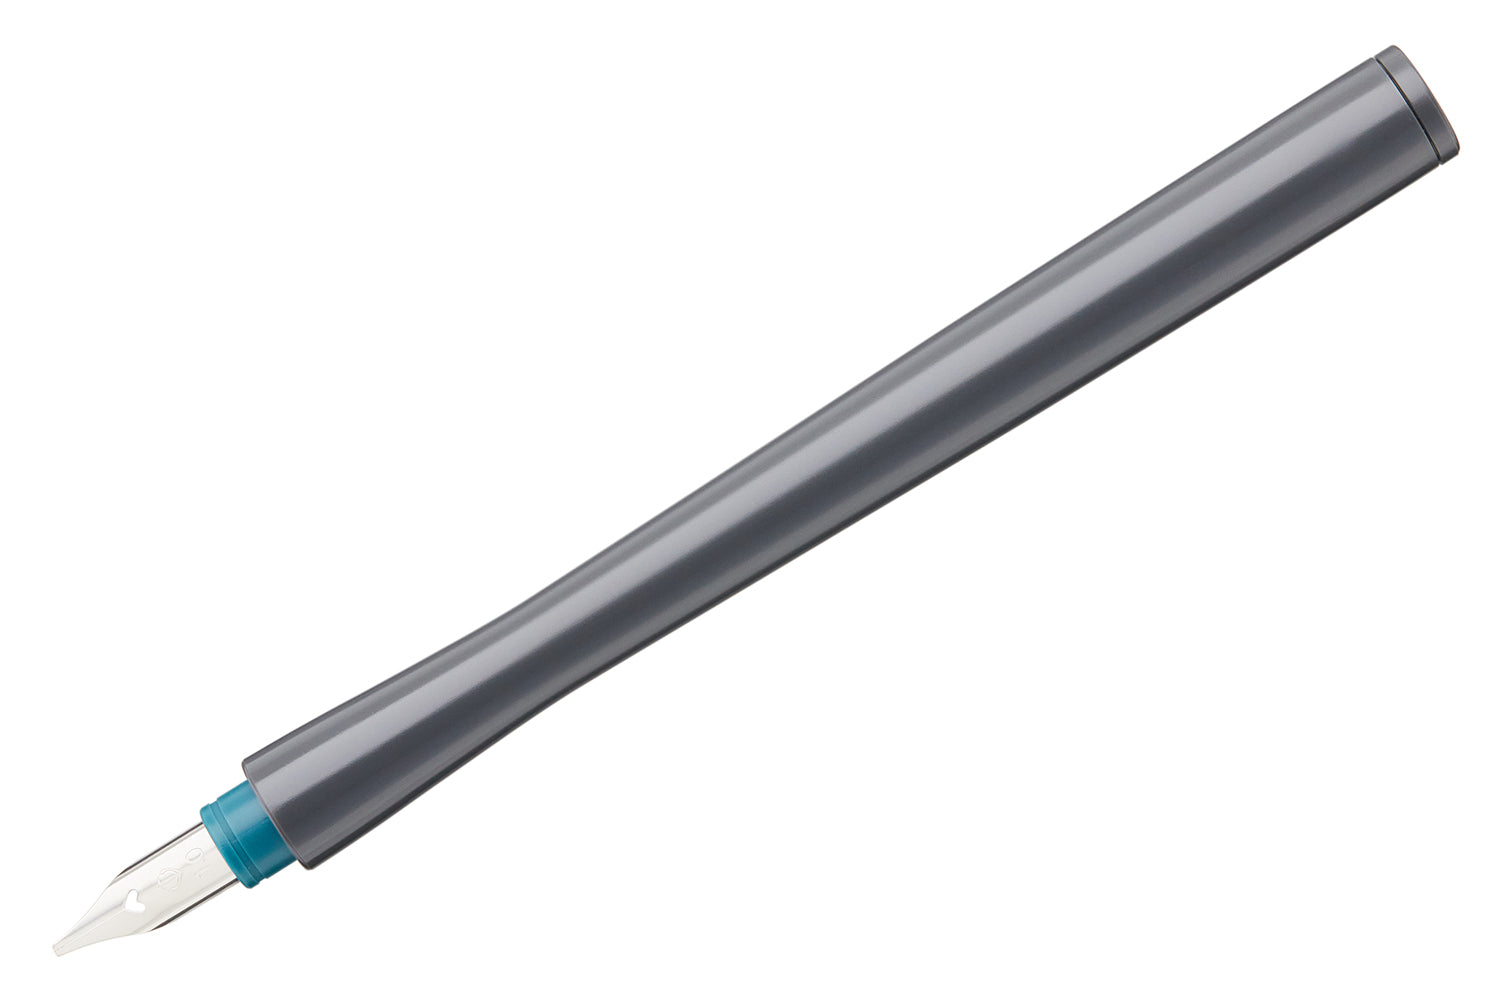 Parallel Pen - Fountain pen - 3.8 mm